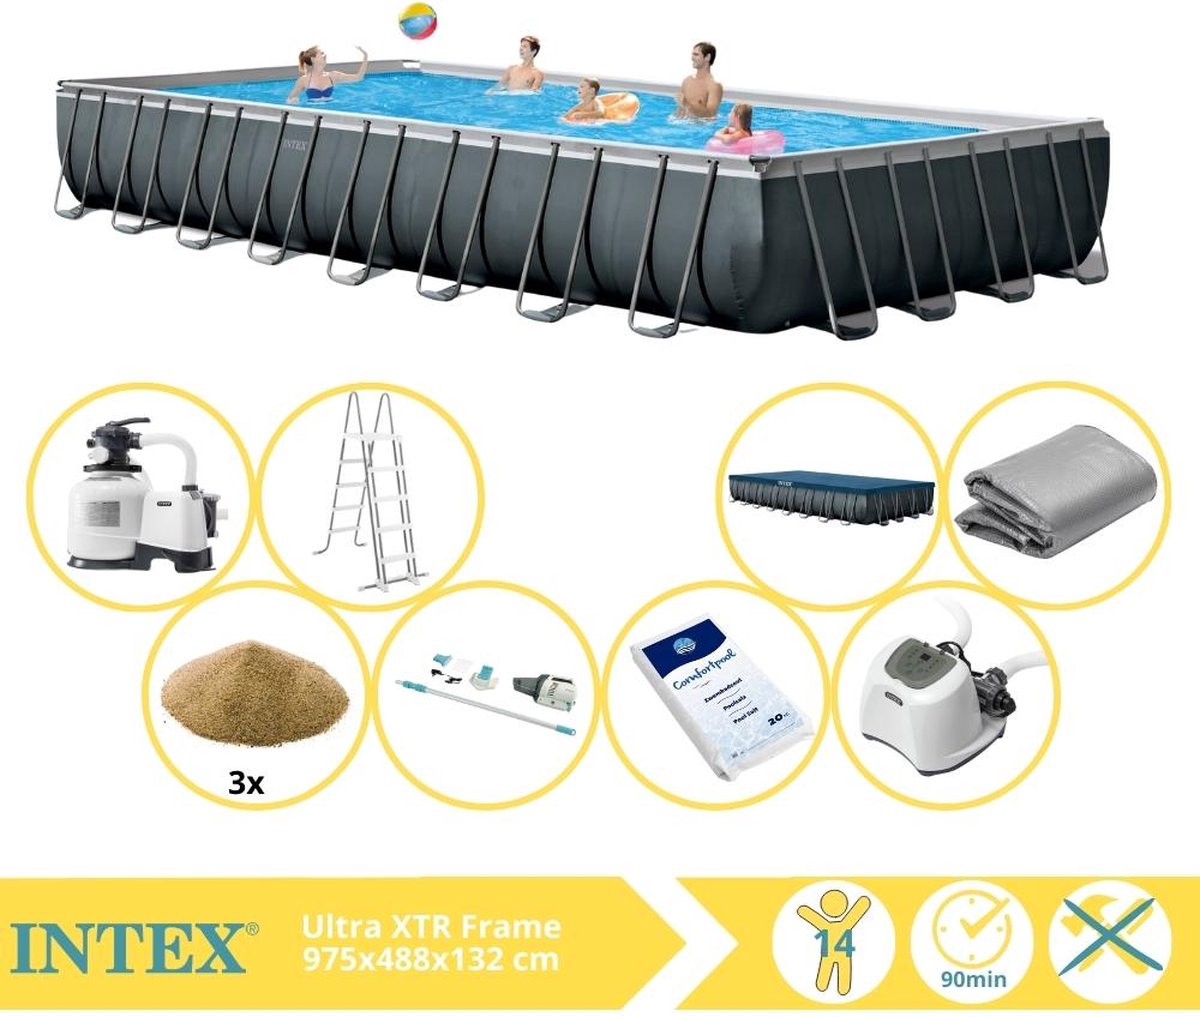 Intex Ultra XTR Frame Zwembad - Opzetzwembad - 975x488x132 cm - Inclusief Filterzand, Stofzuiger, Zoutsysteem en Zout